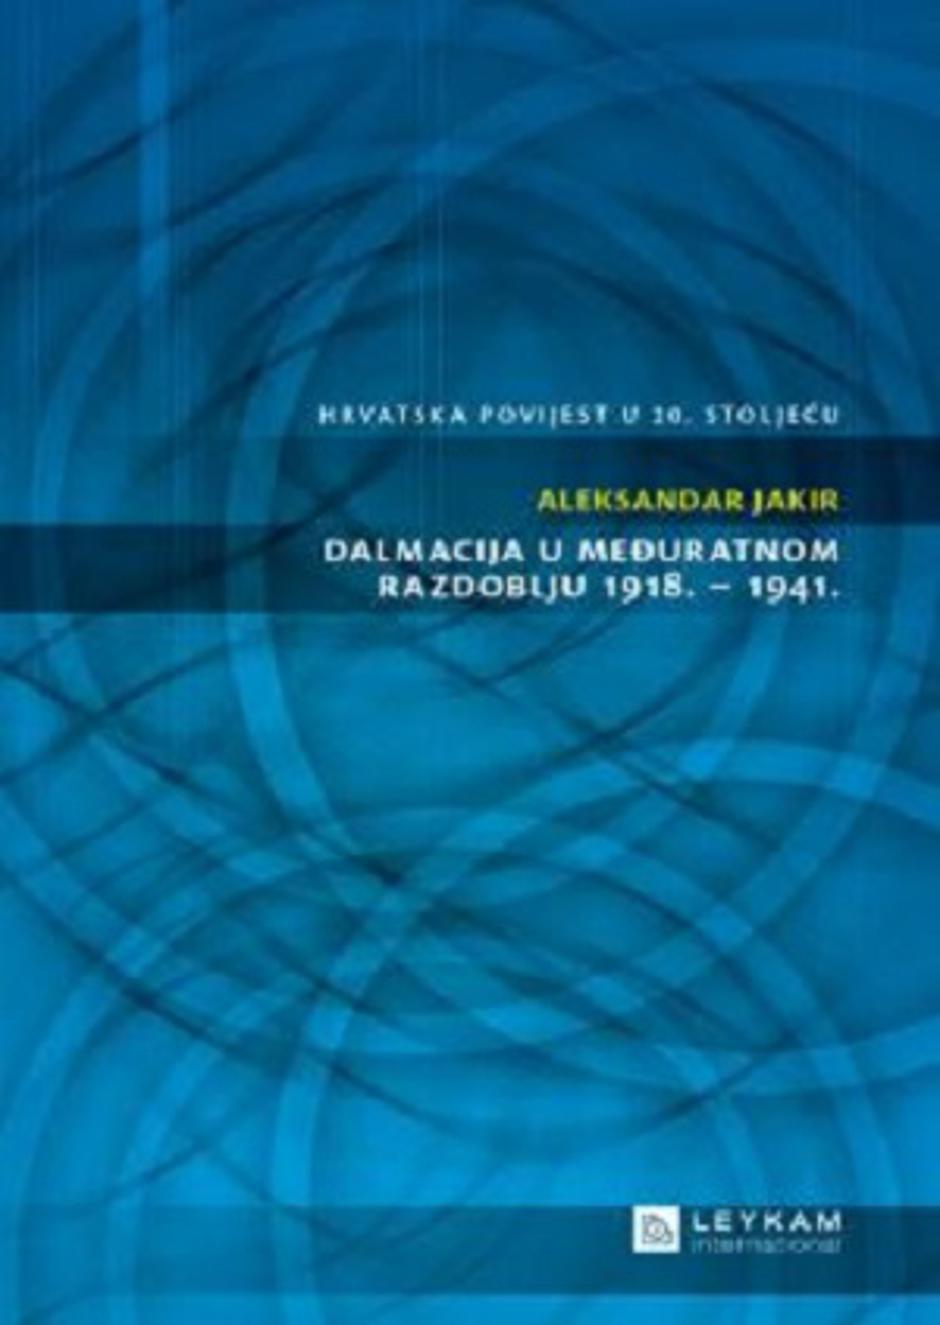 "Dalmacija u međuratnom razdoblju 1918.-1941.", Aleksandar Jakir | Author: Leykam